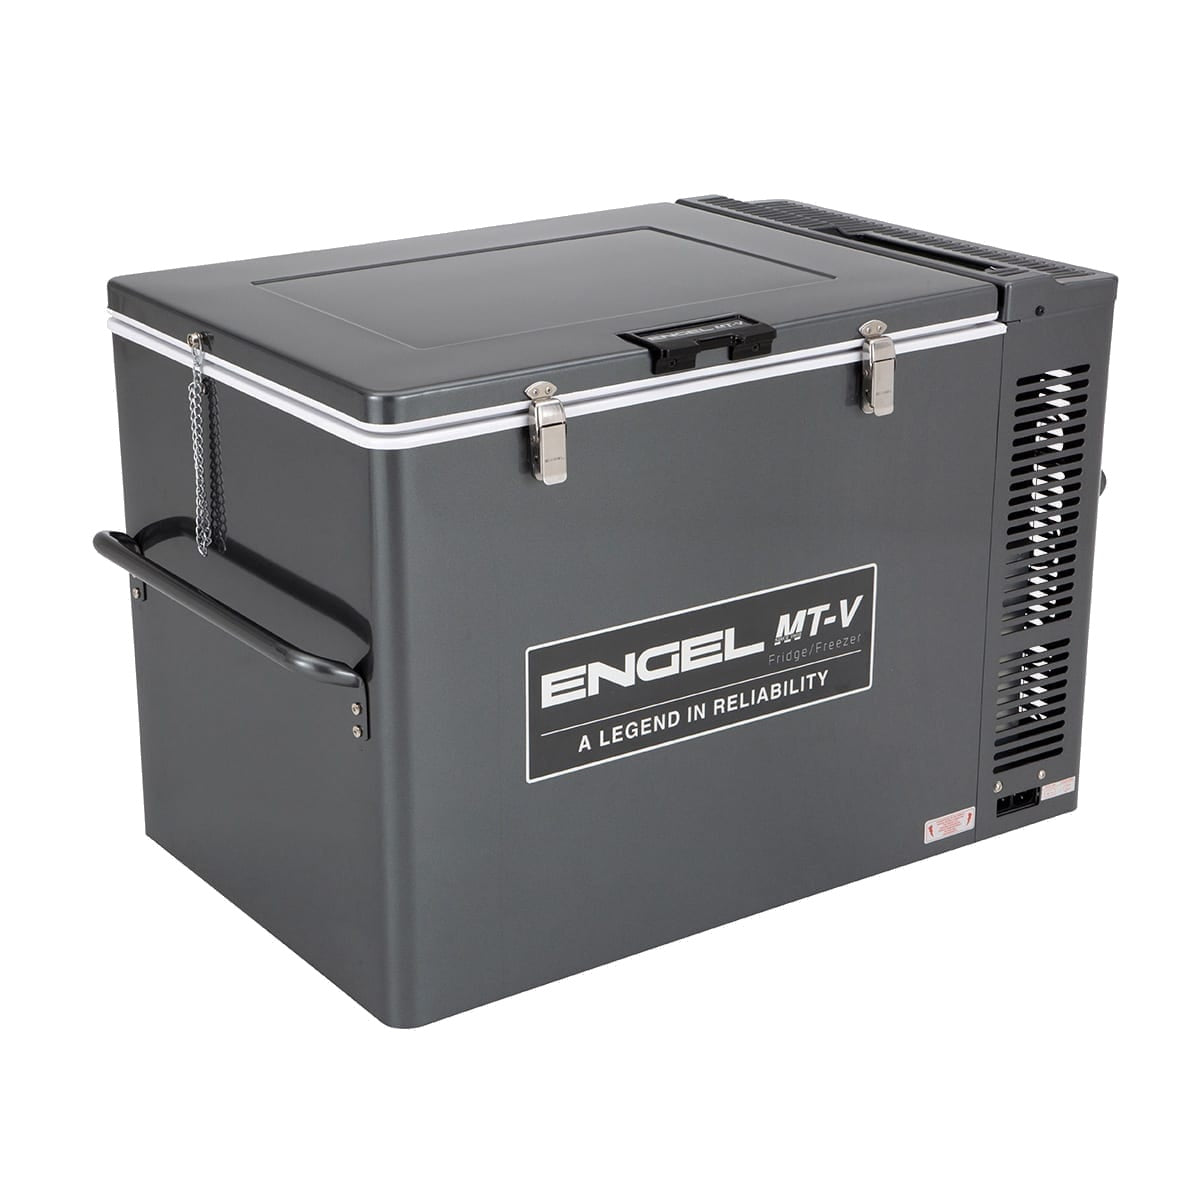 Engel MT-V Series 80 Litre, Gunmetal, 12/24V DC (2.6/1.3A) & 240V AC | Fridges/Freezers perth pro auto electric parts